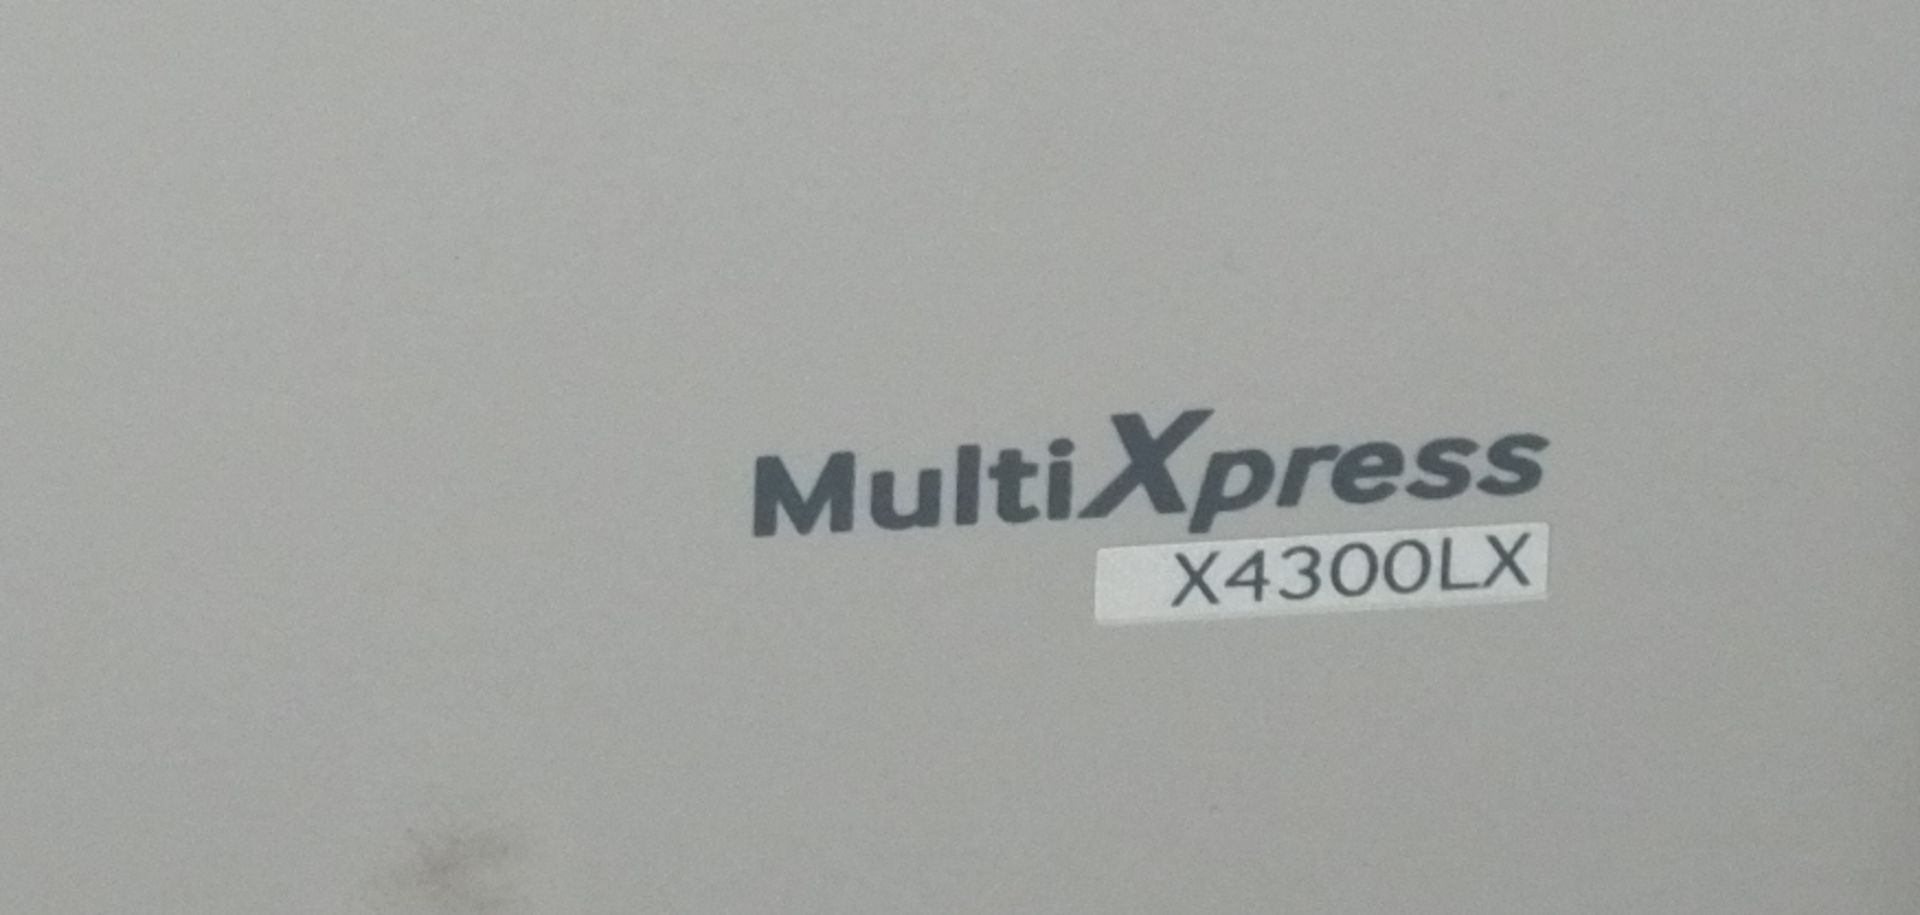 Samsung Multi Xpress X4300LX printer - Image 4 of 4